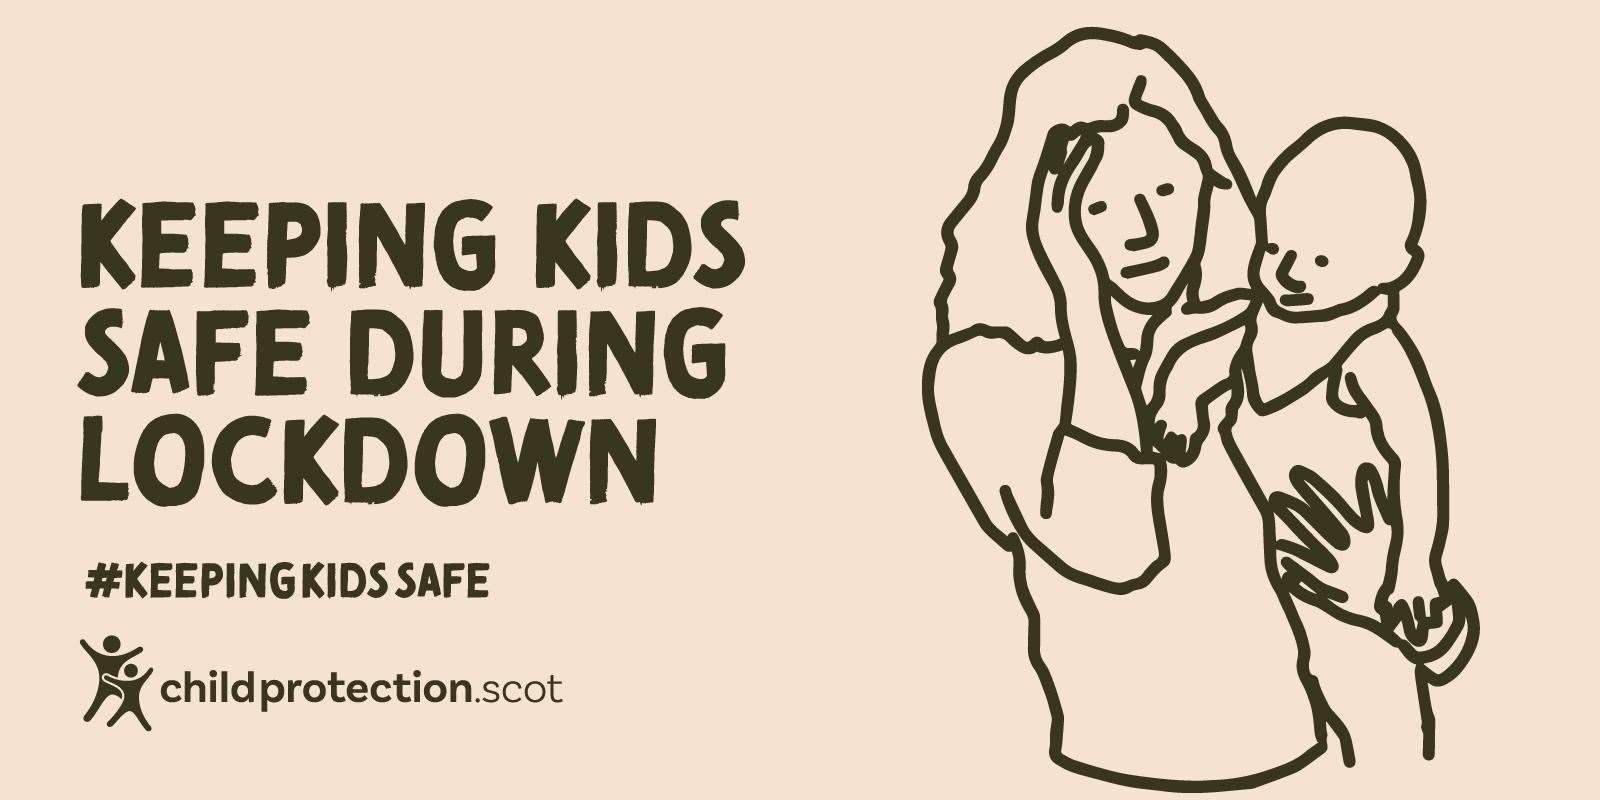 Communities can help keep vulnerable kids safe during lockdown.